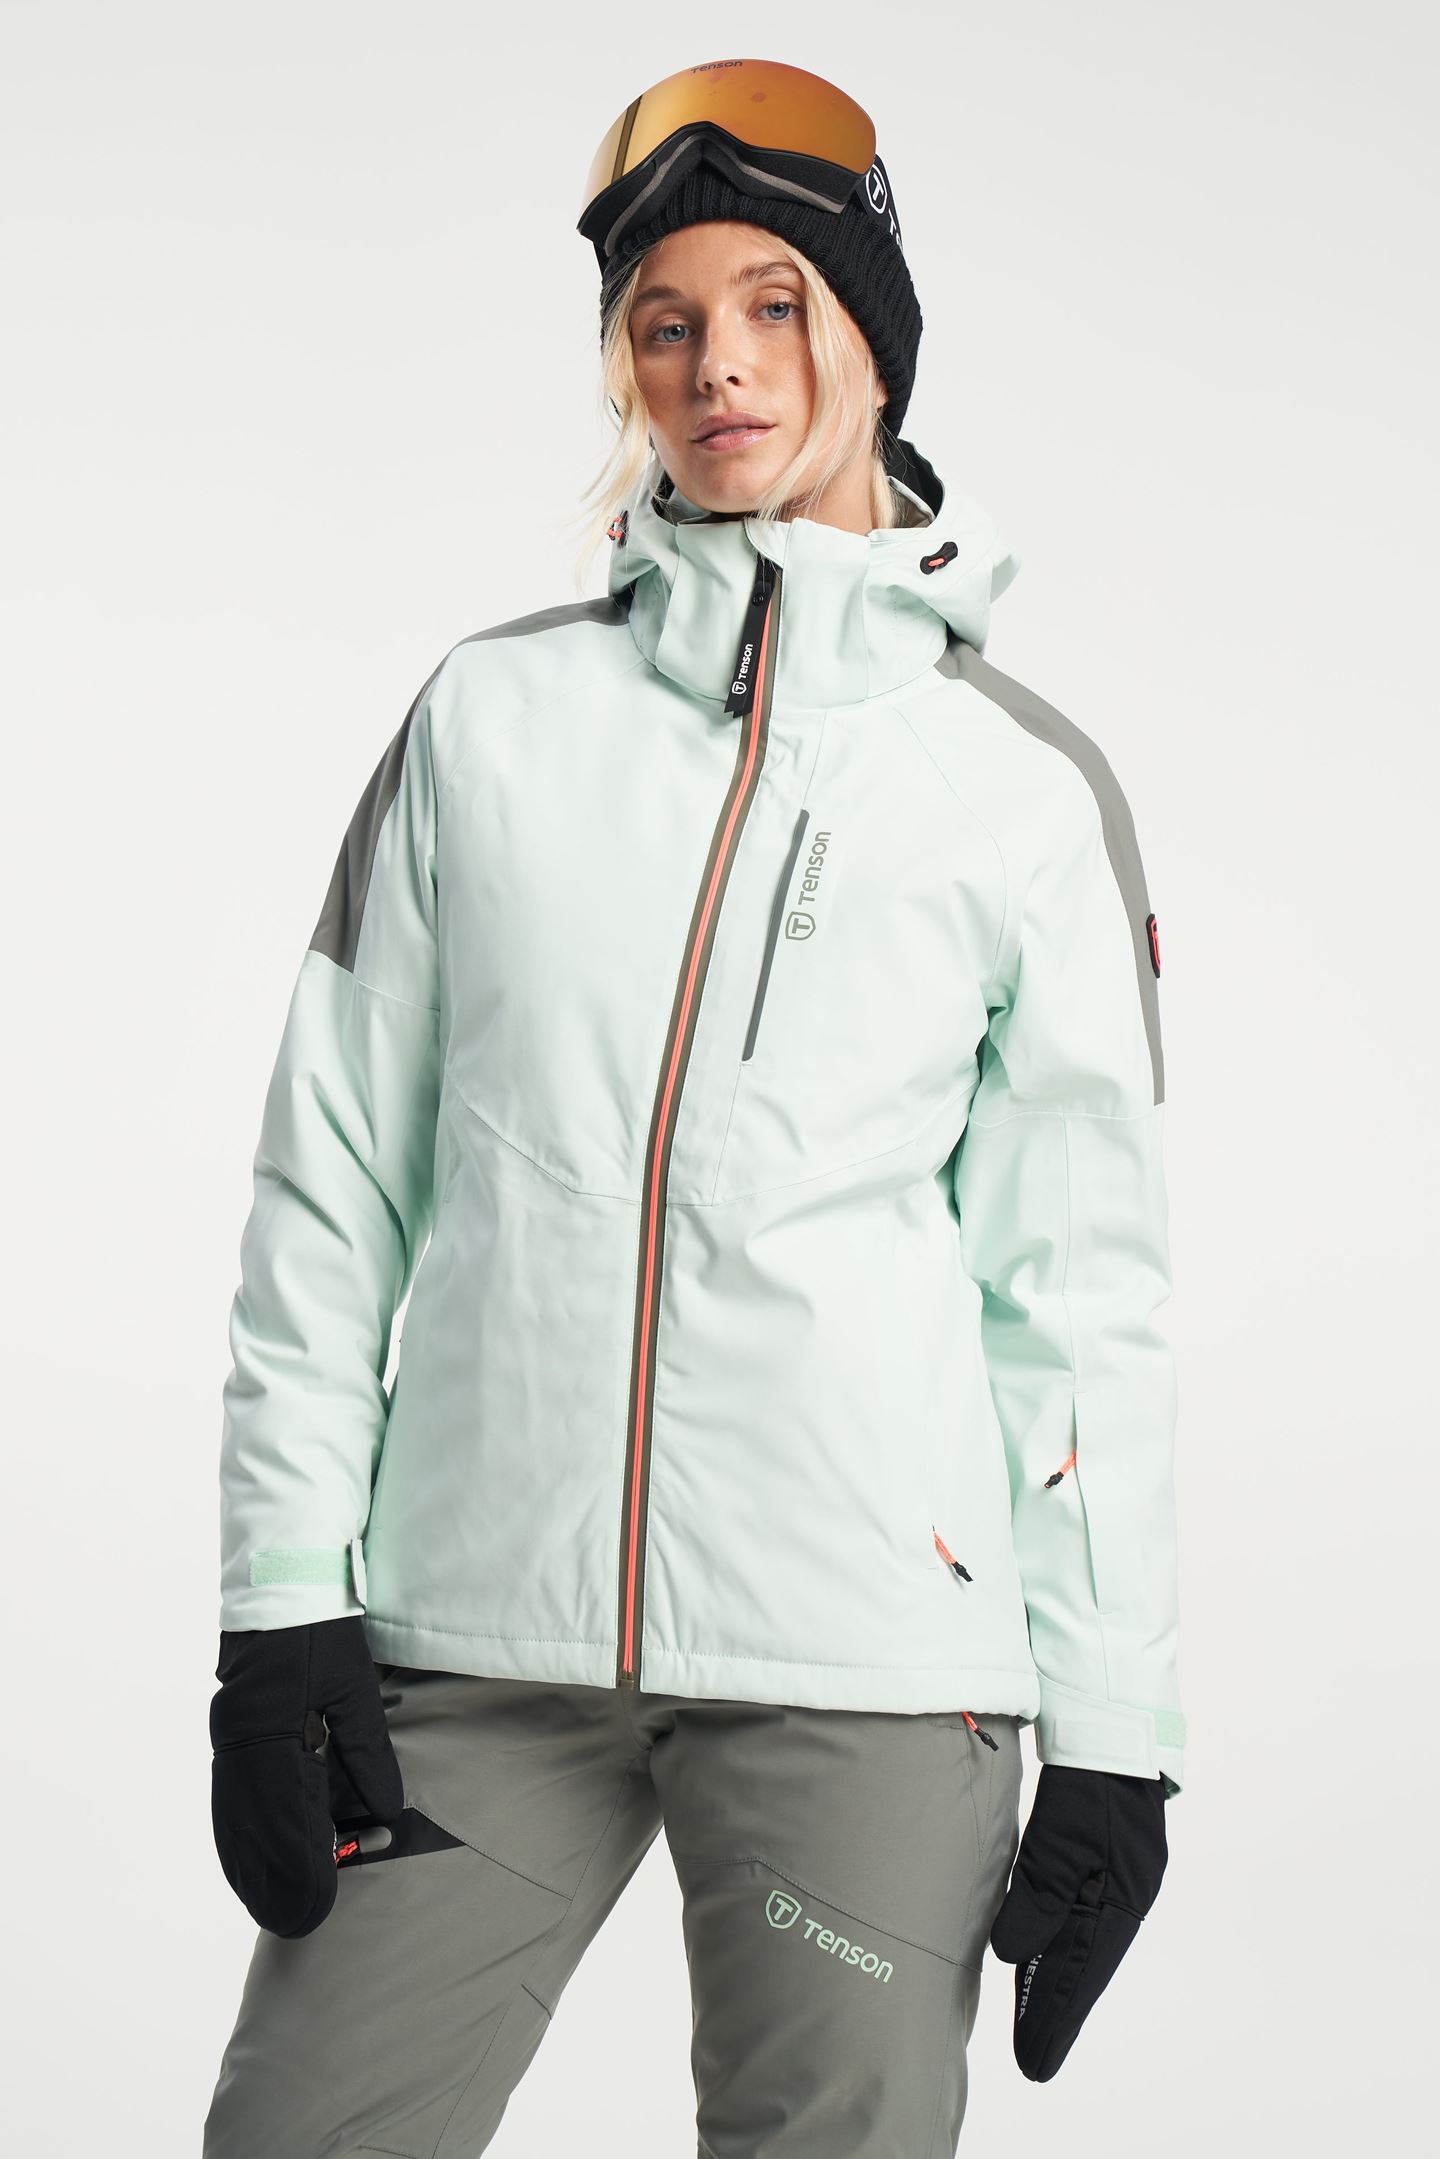 Oh String string Toevlucht Core Ski Jacket - Klassieke ski-jas - Light Green